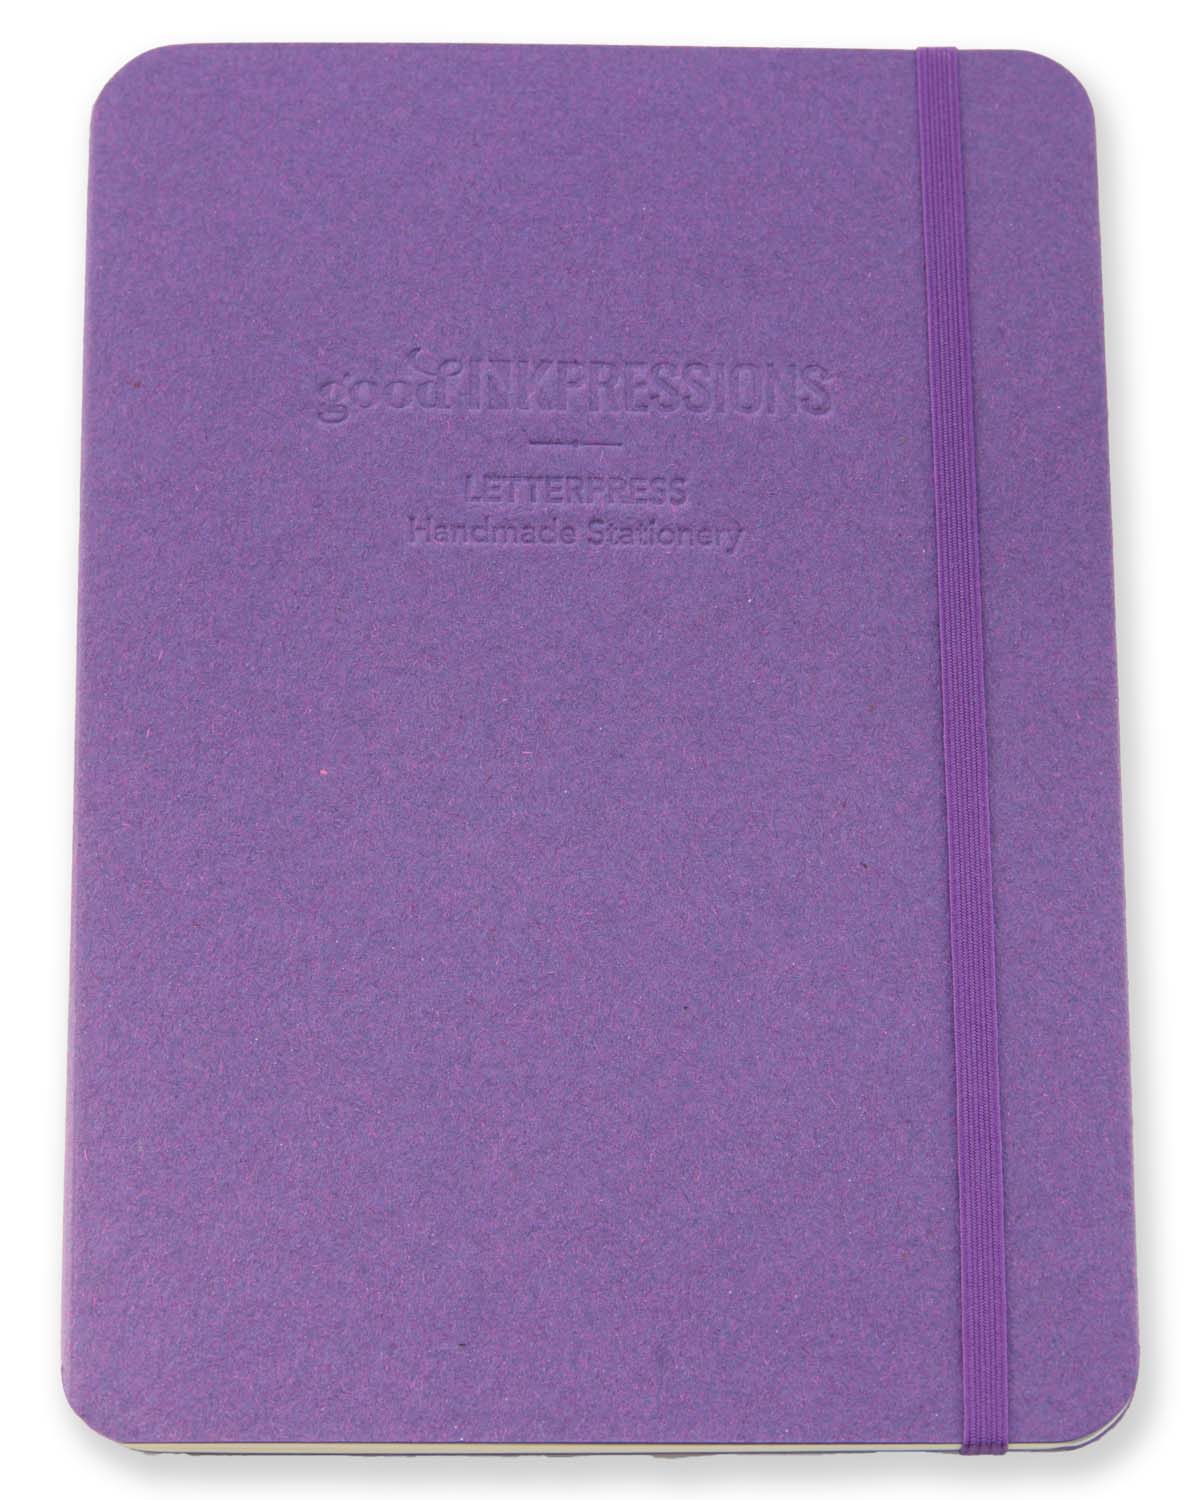 A5 Tomoe River Notebook Journal - Purple